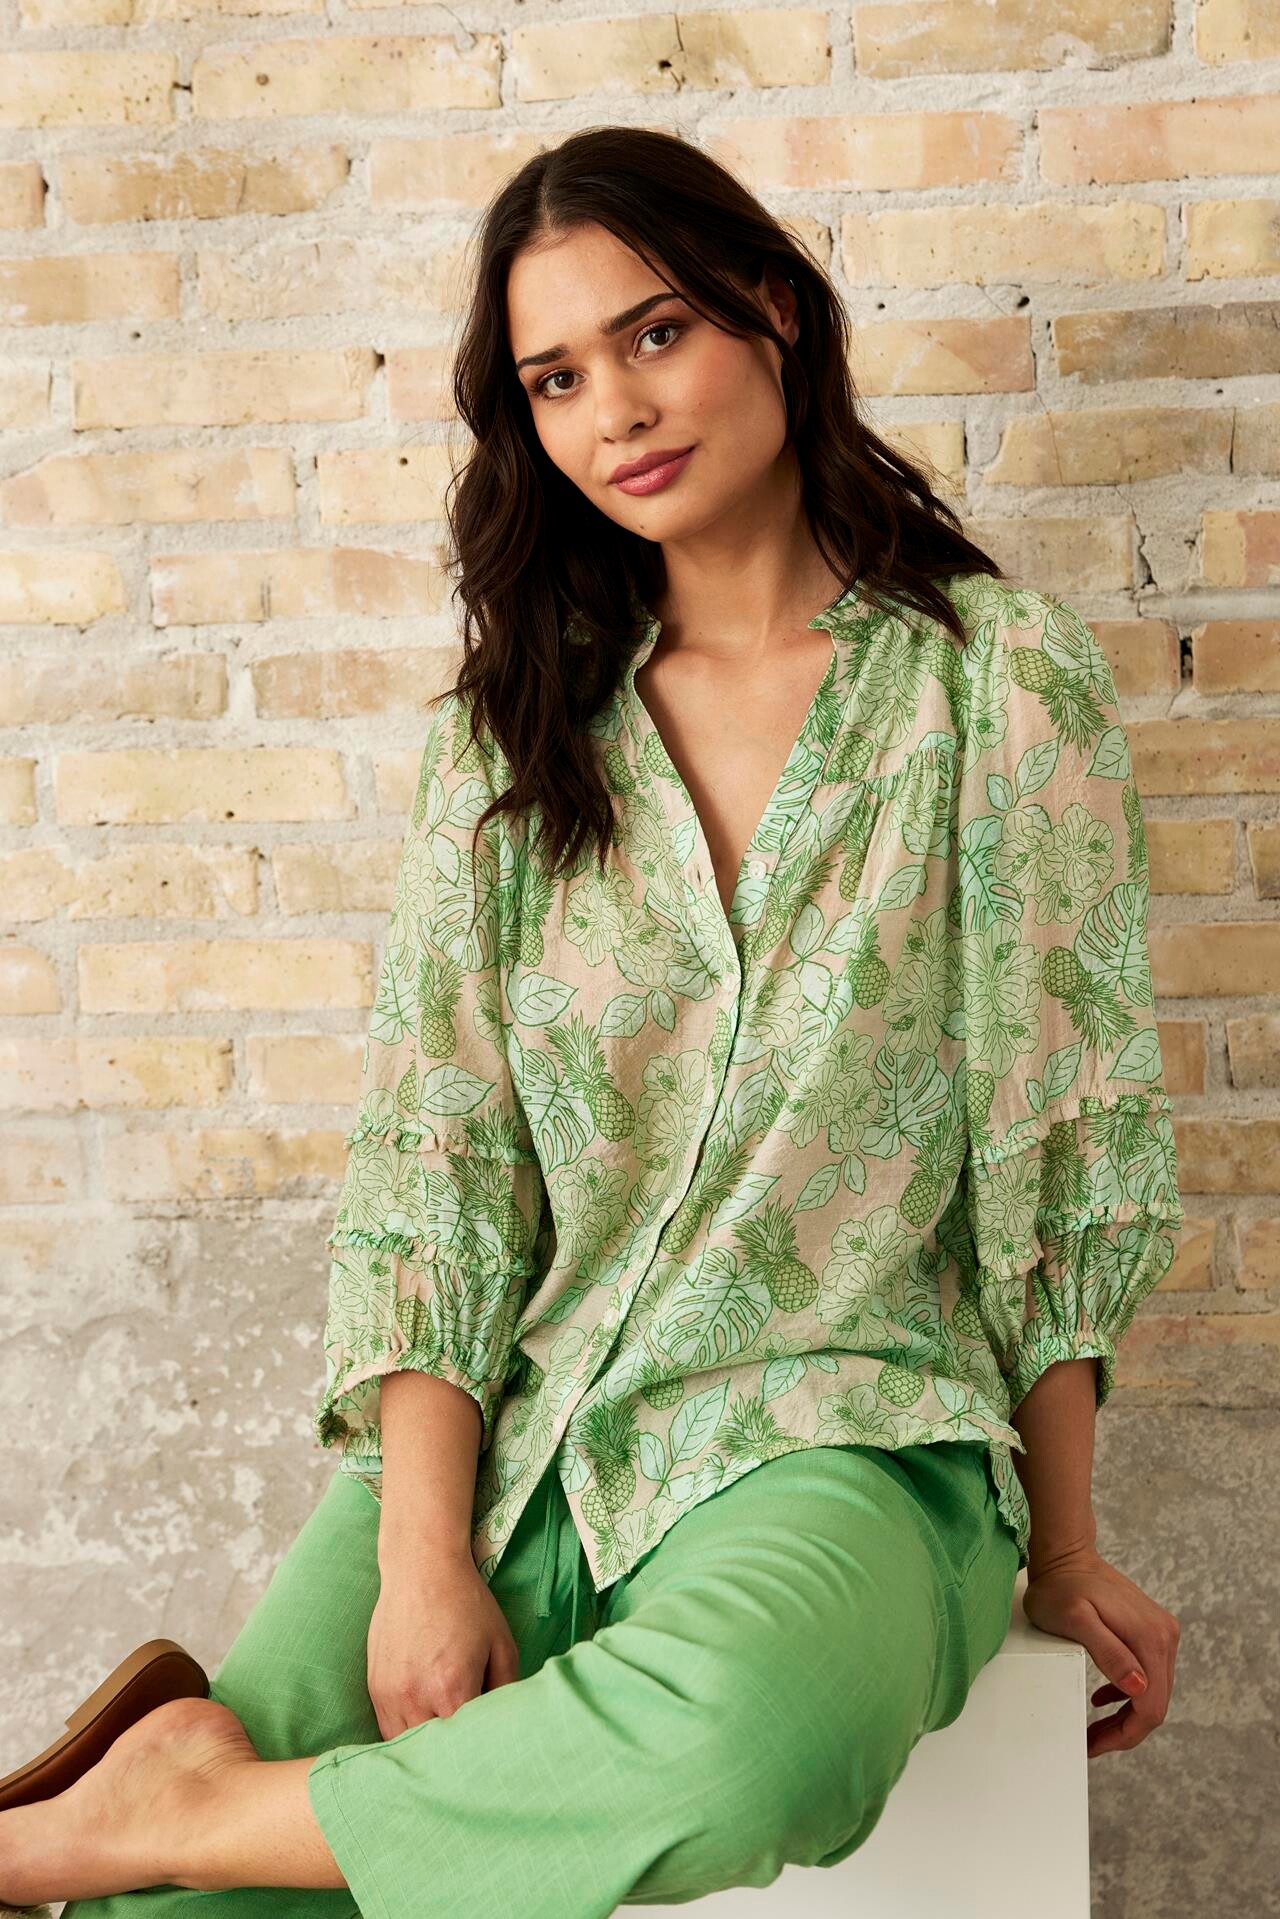 Se IN FRONT Exotic Skjorte, Farve: Green, Størrelse: XL, Dame hos Infront Women